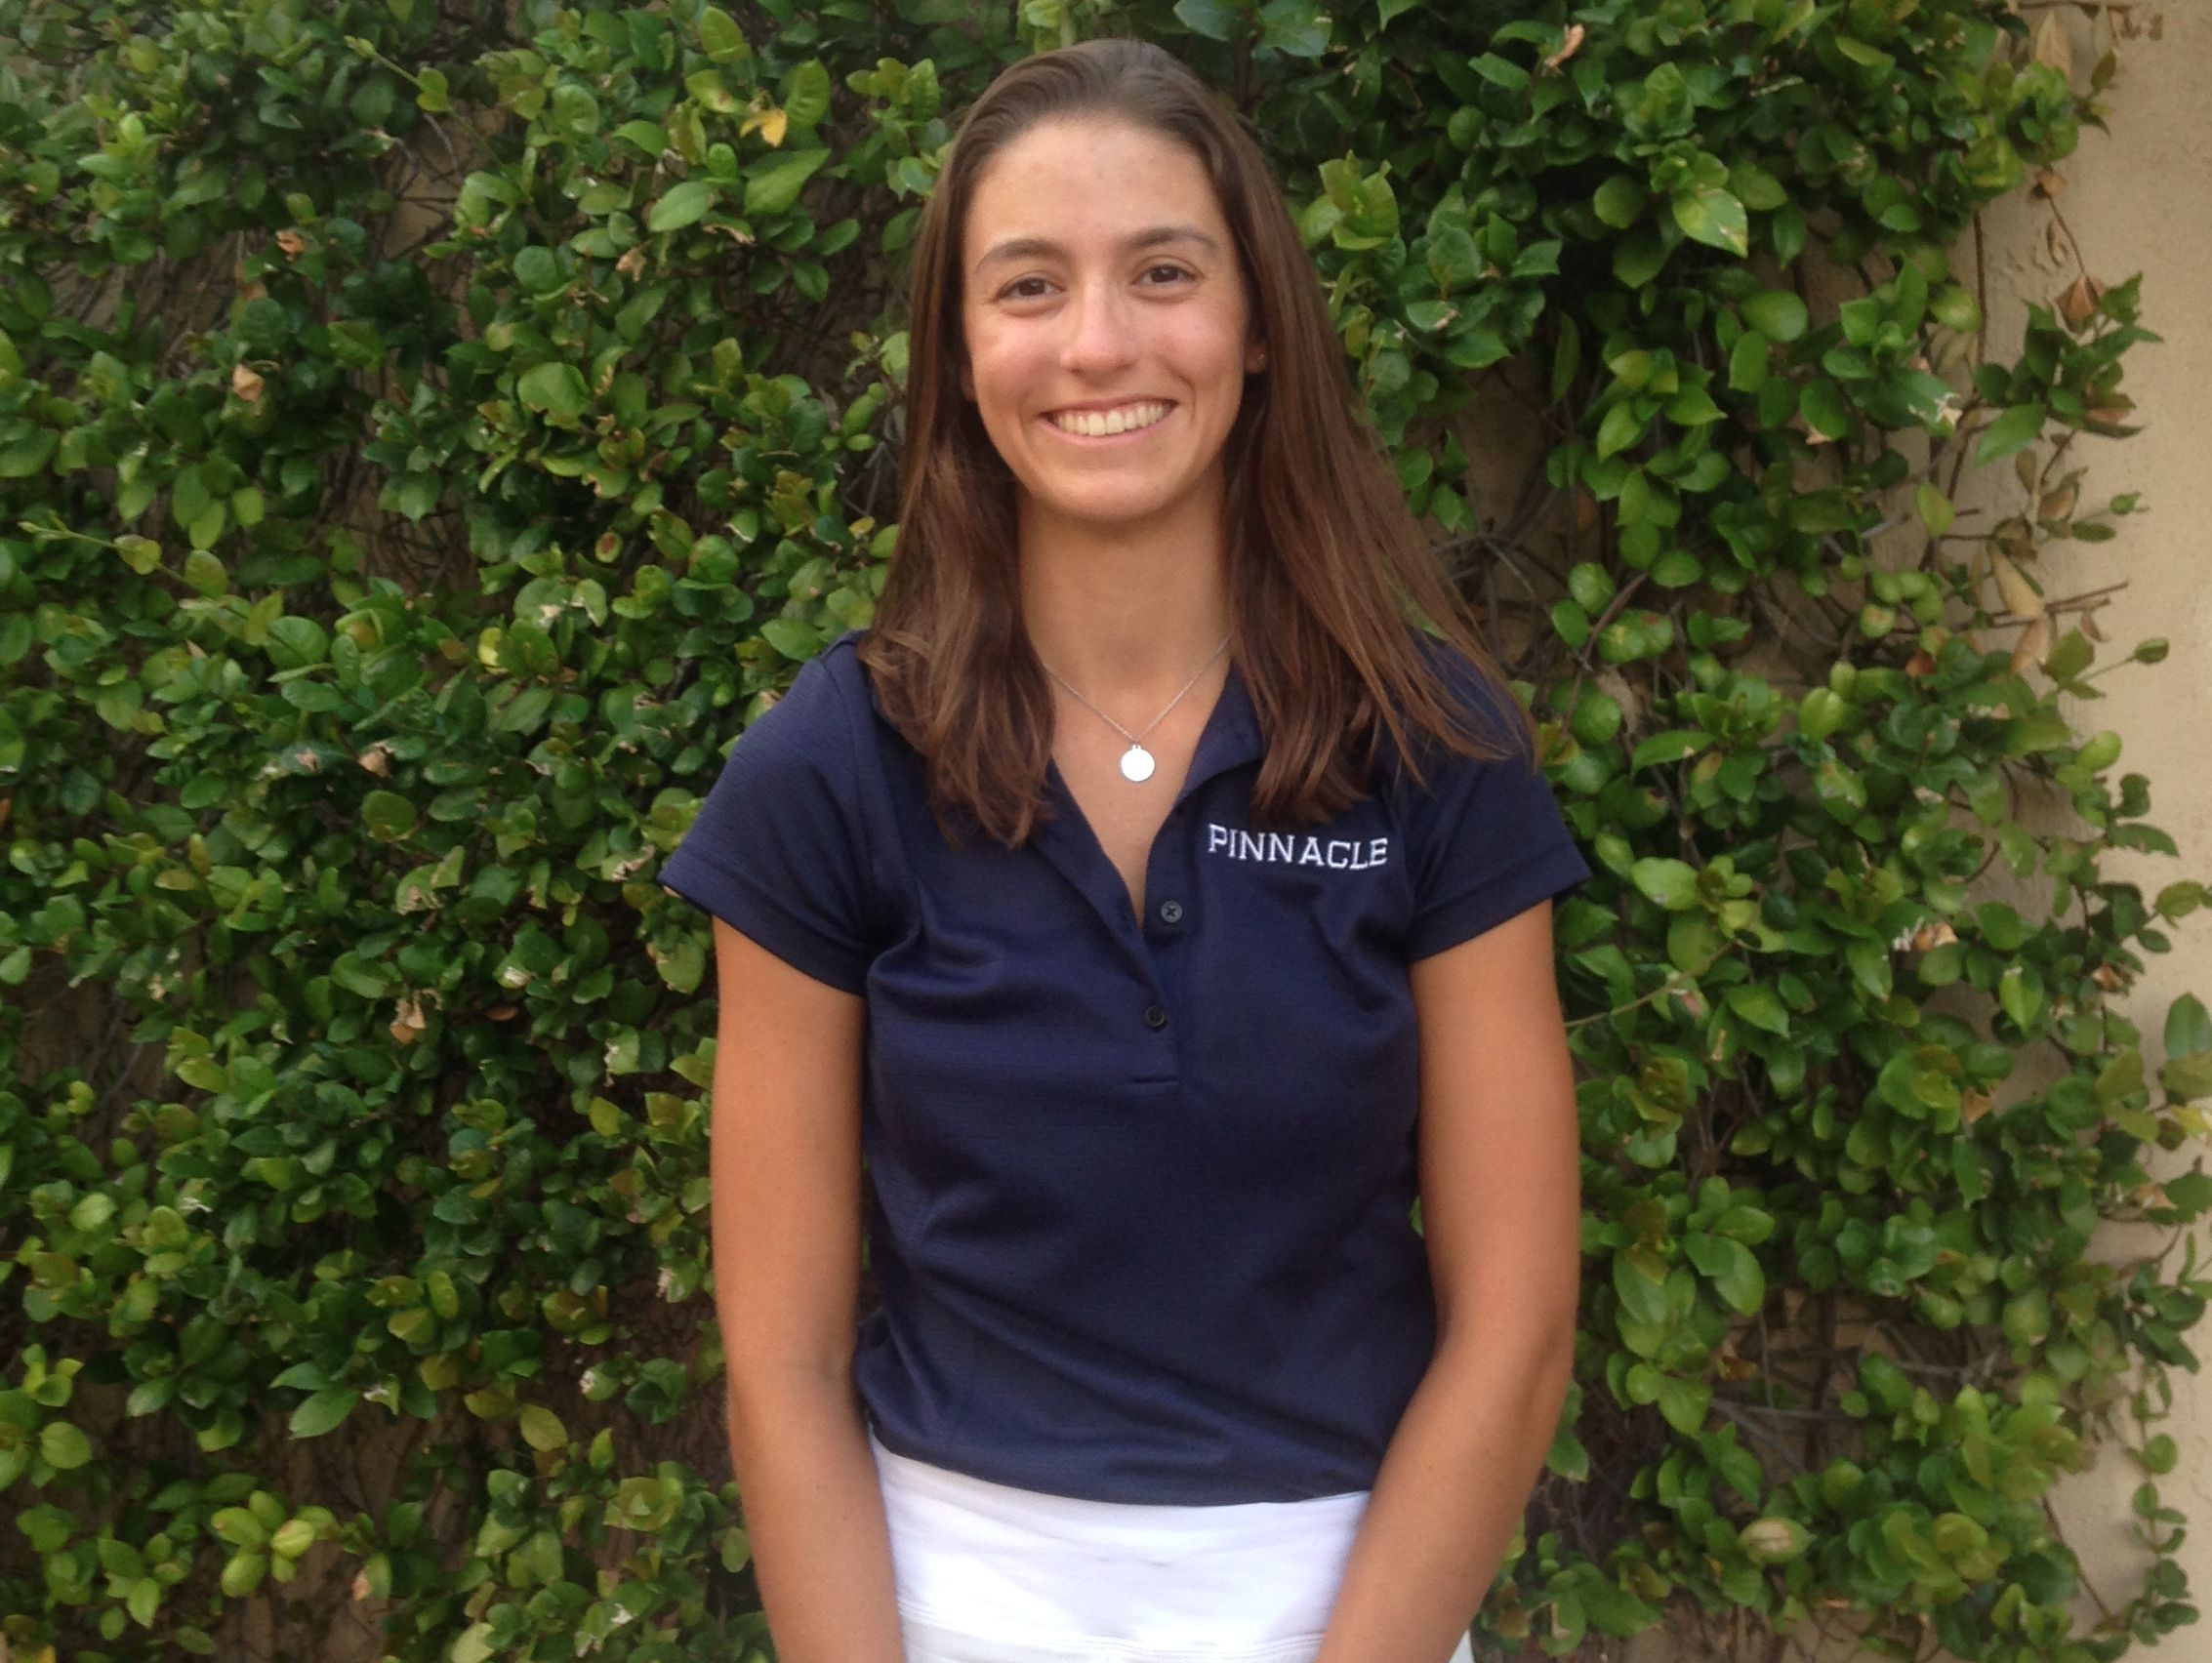 Phoenix Pinnacle golfer Sara Padilla is azcentral sports' Female Athlete of the Week.